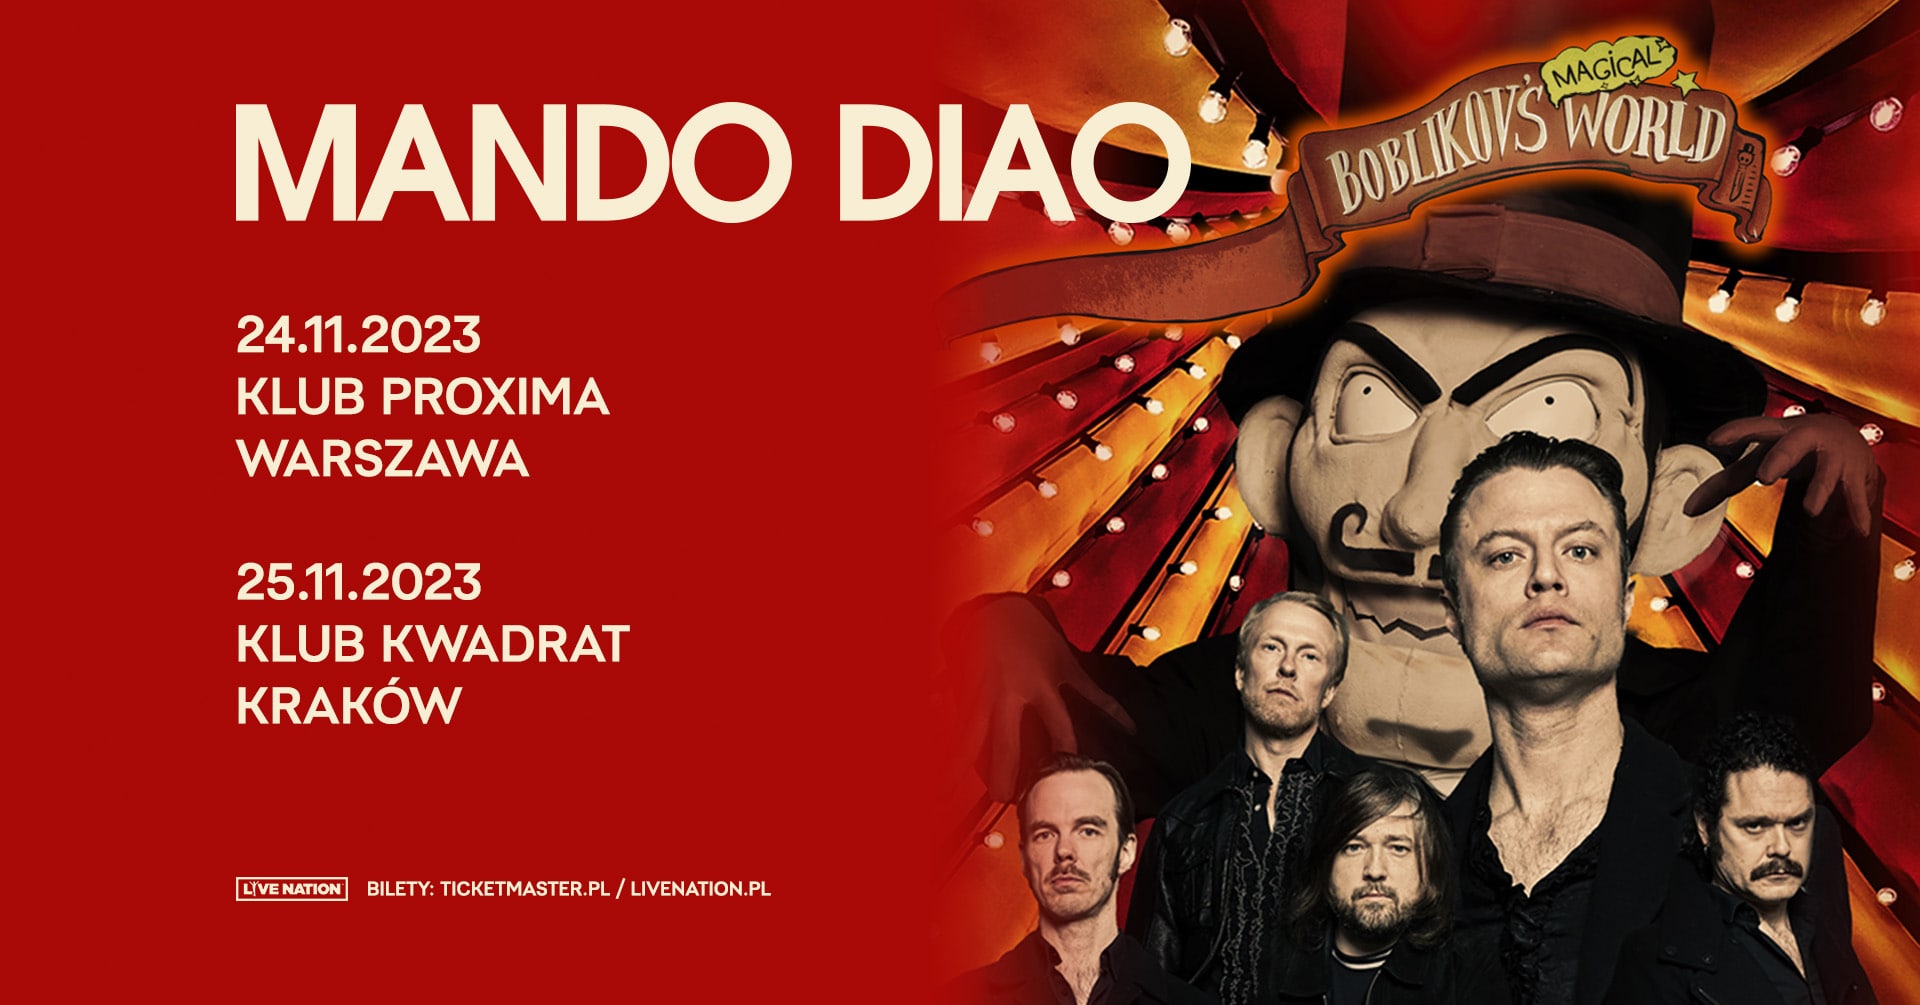 Mando Diao – Boblikov’s Magical World Tour 2023 – Warszawa – Klub Proxima, 24.11.2023